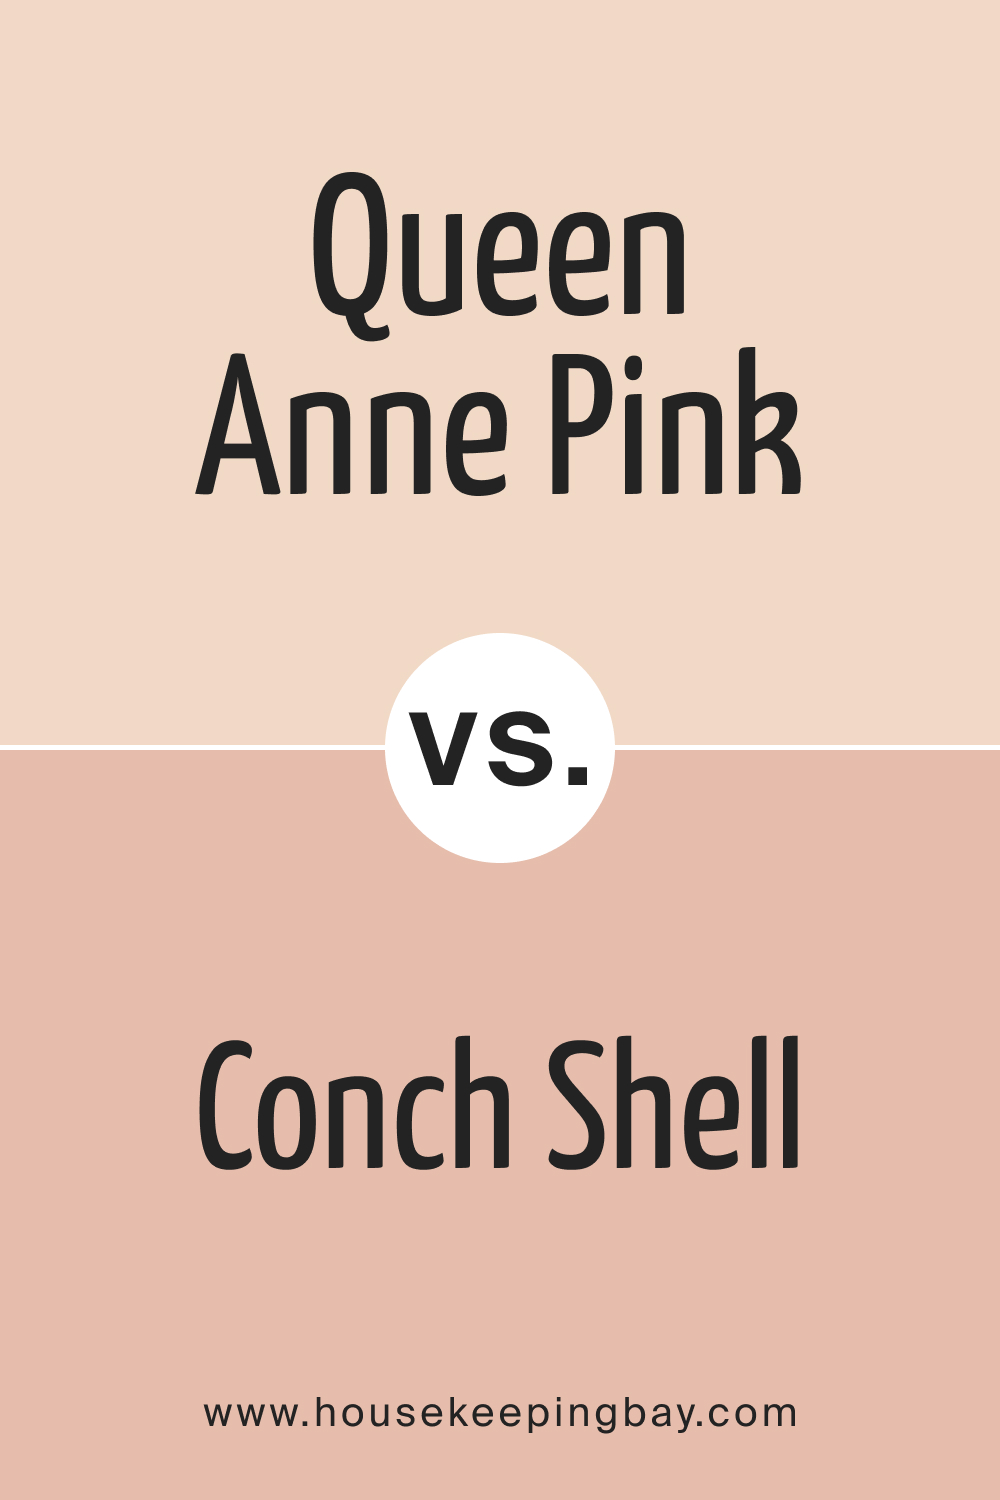 Queen Anne Pink HC-60 vs. BM 052 Conch Shell